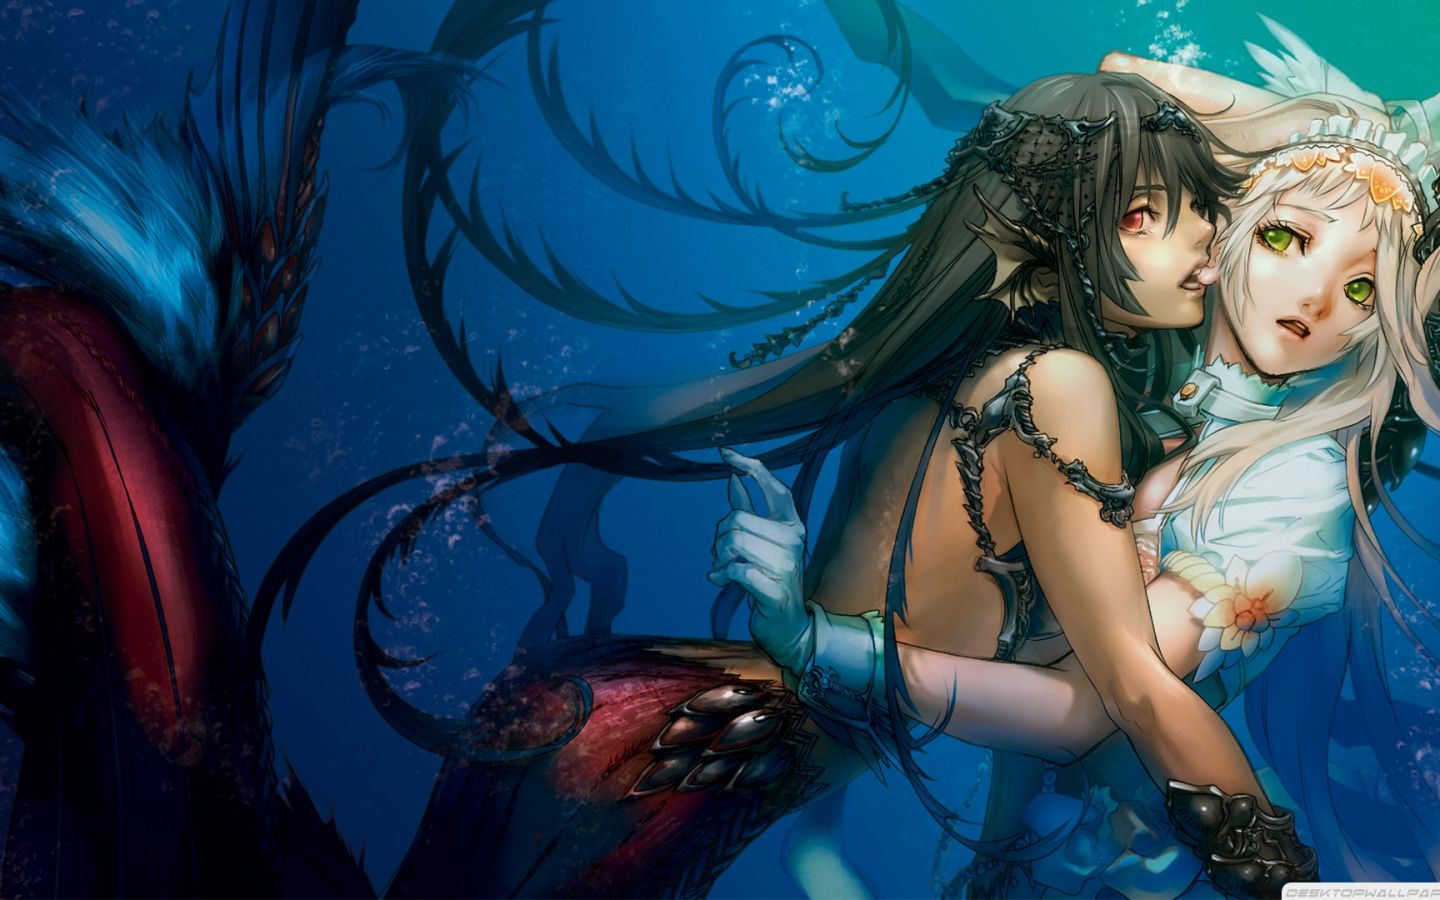 Free download Black Long Hair Mermaids Anime Girls Underwater Fantasy Art 19201080 [1920x1080] for your Desktop, Mobile & Tablet. Explore Anime Mermaid Wallpaper. Vintage Mermaid Wallpaper, Image of Mermaids